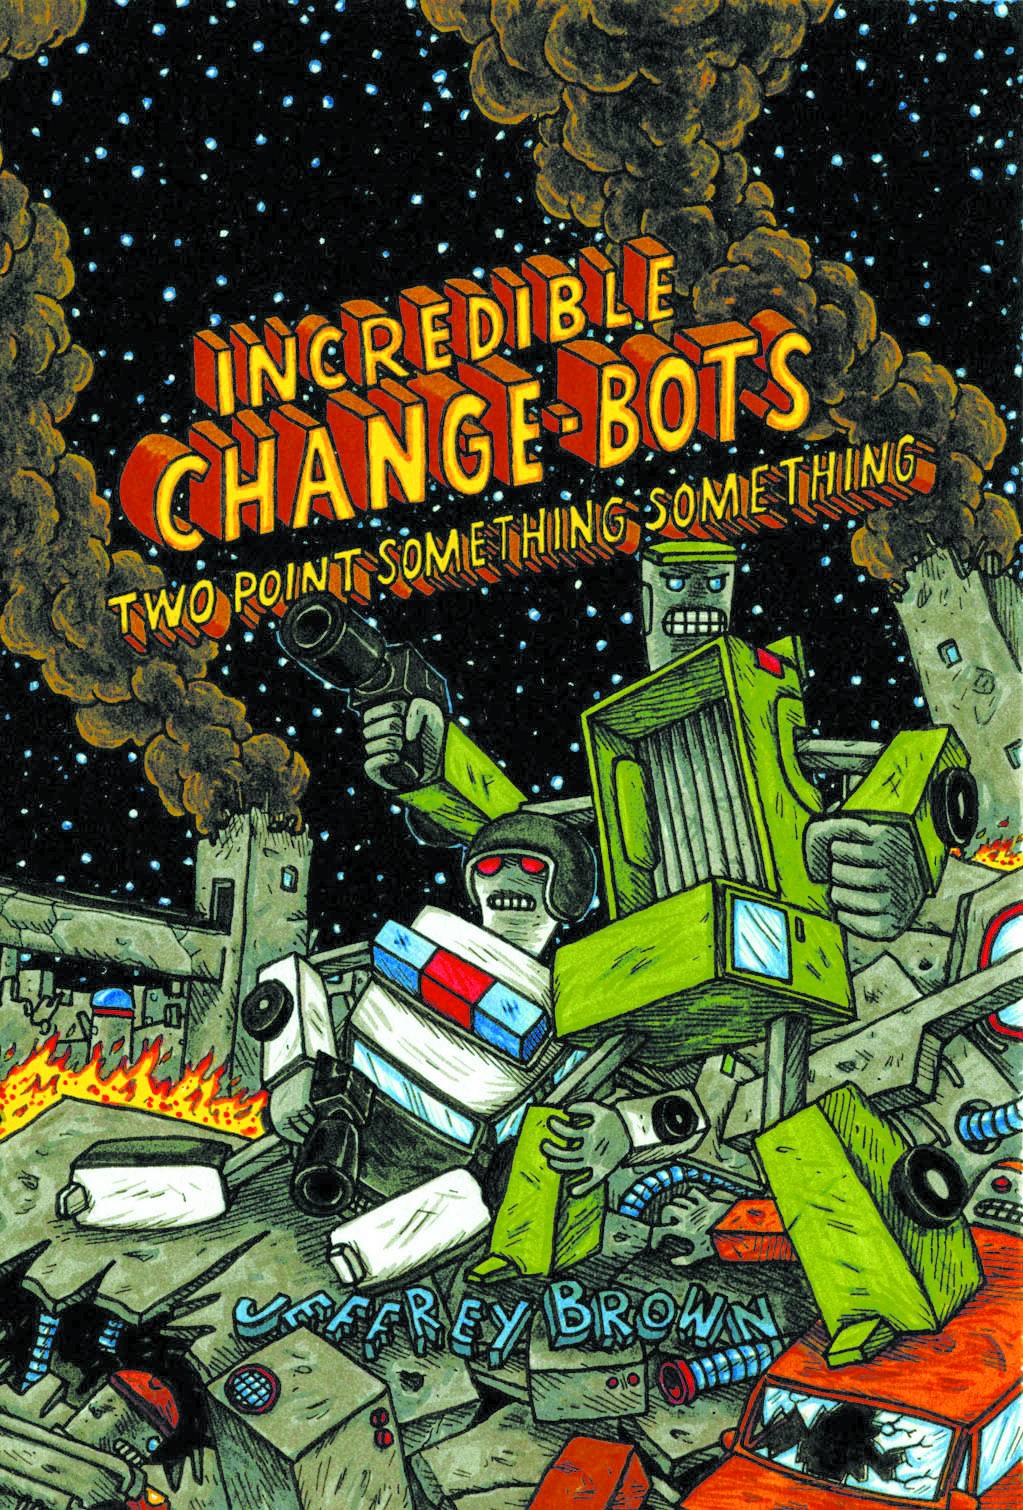 Incredible Change Bots Graphic Novel Volume 3